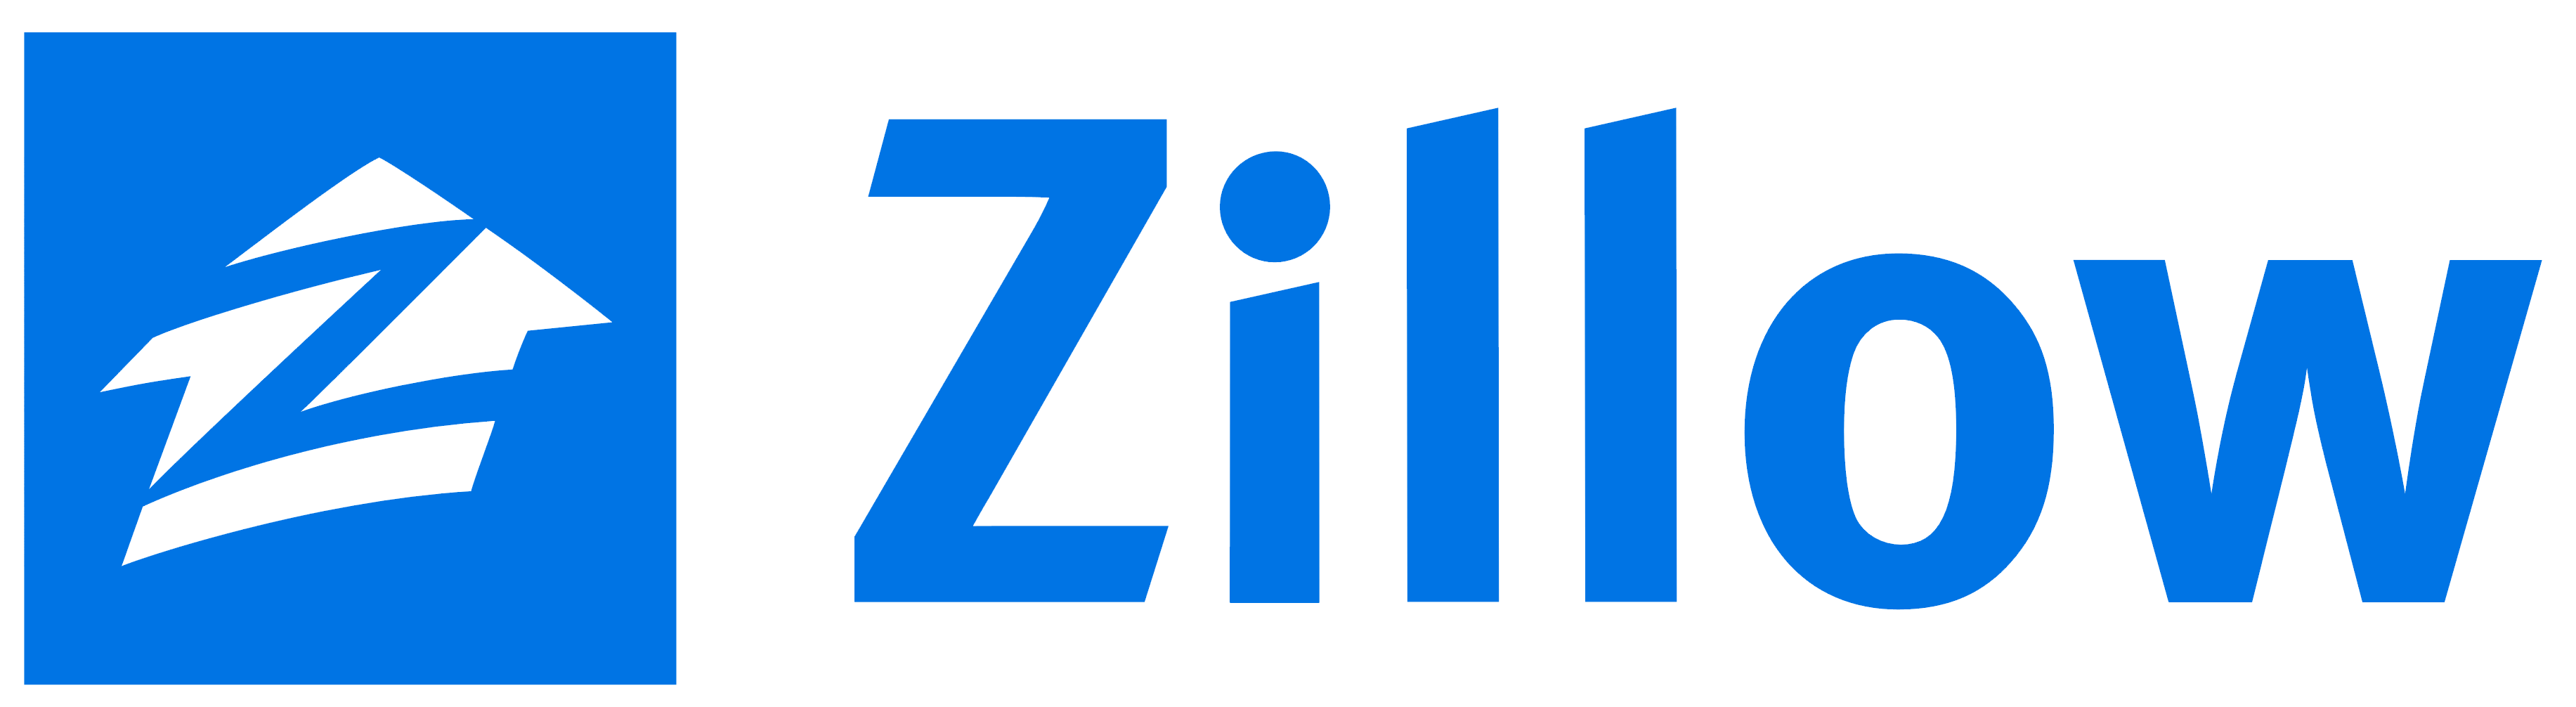 Zillow Transparent Logo - Zillow (zillow.com)